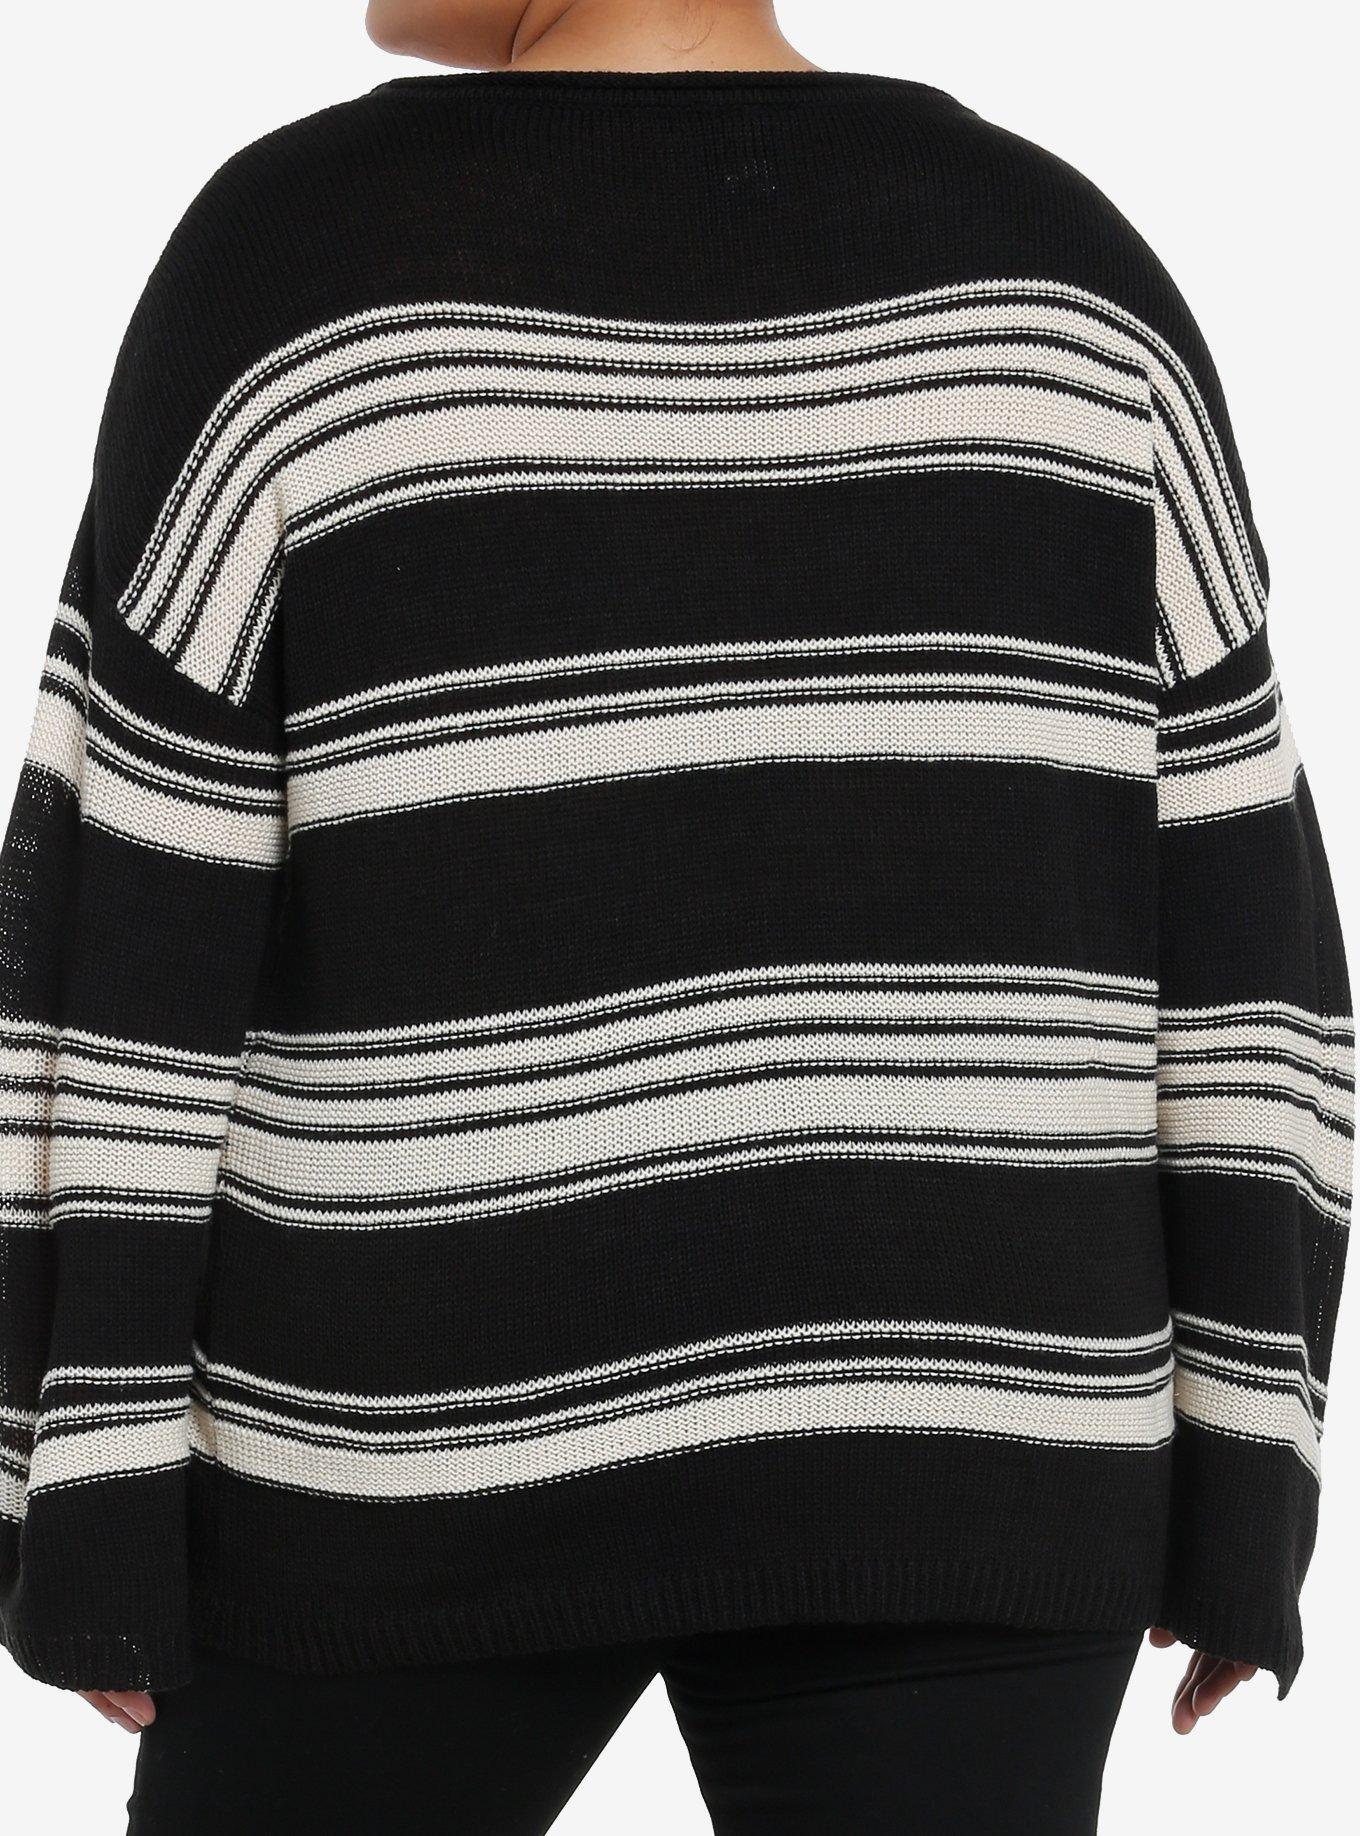 Black & White Stripe Boatneck Girls Knit Sweater Plus